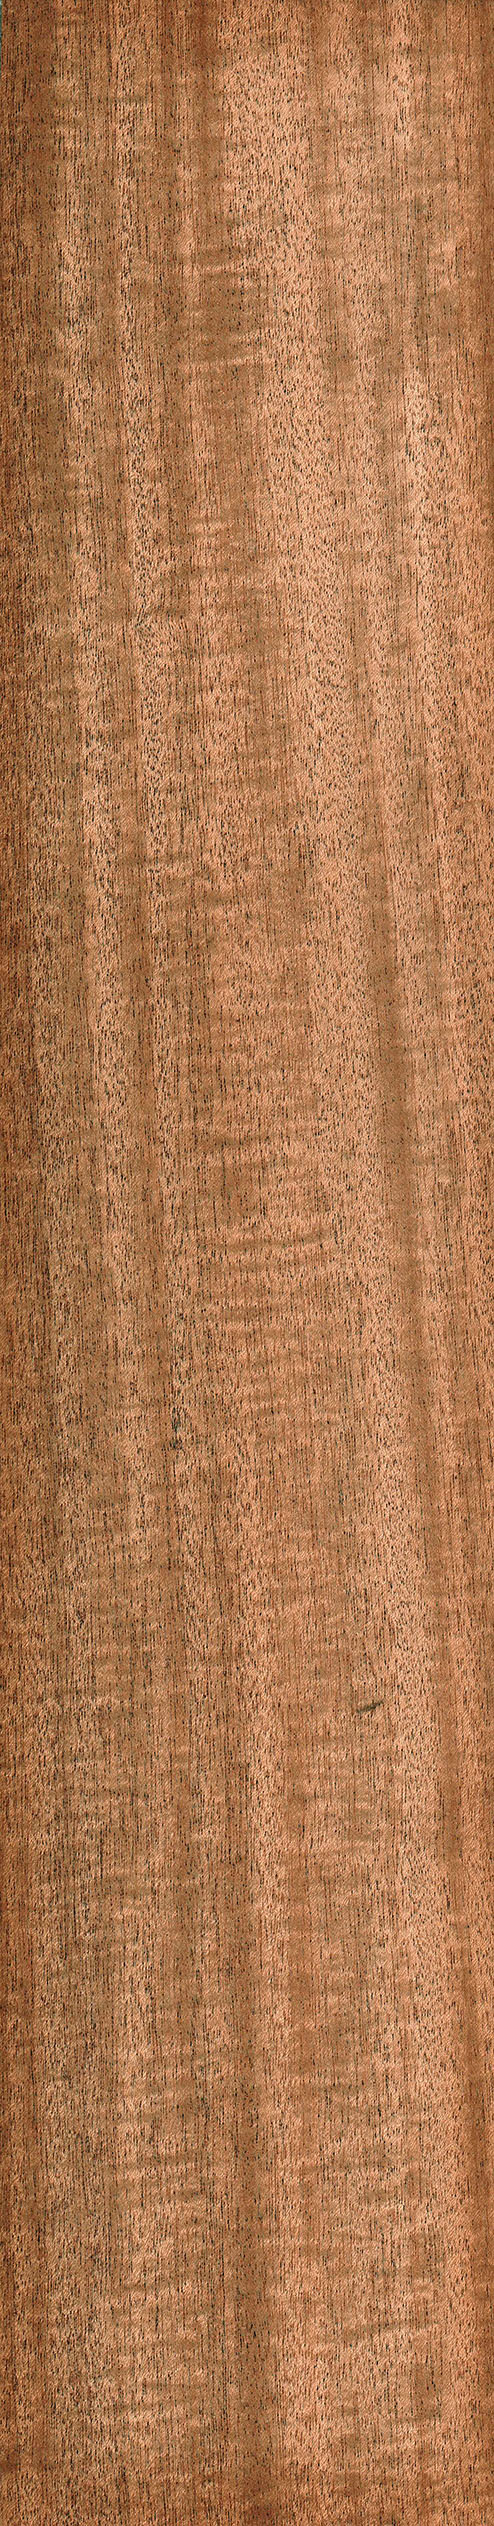 Honduran Mahogany | The Wood Database - Lumber Identification (Hardwood)